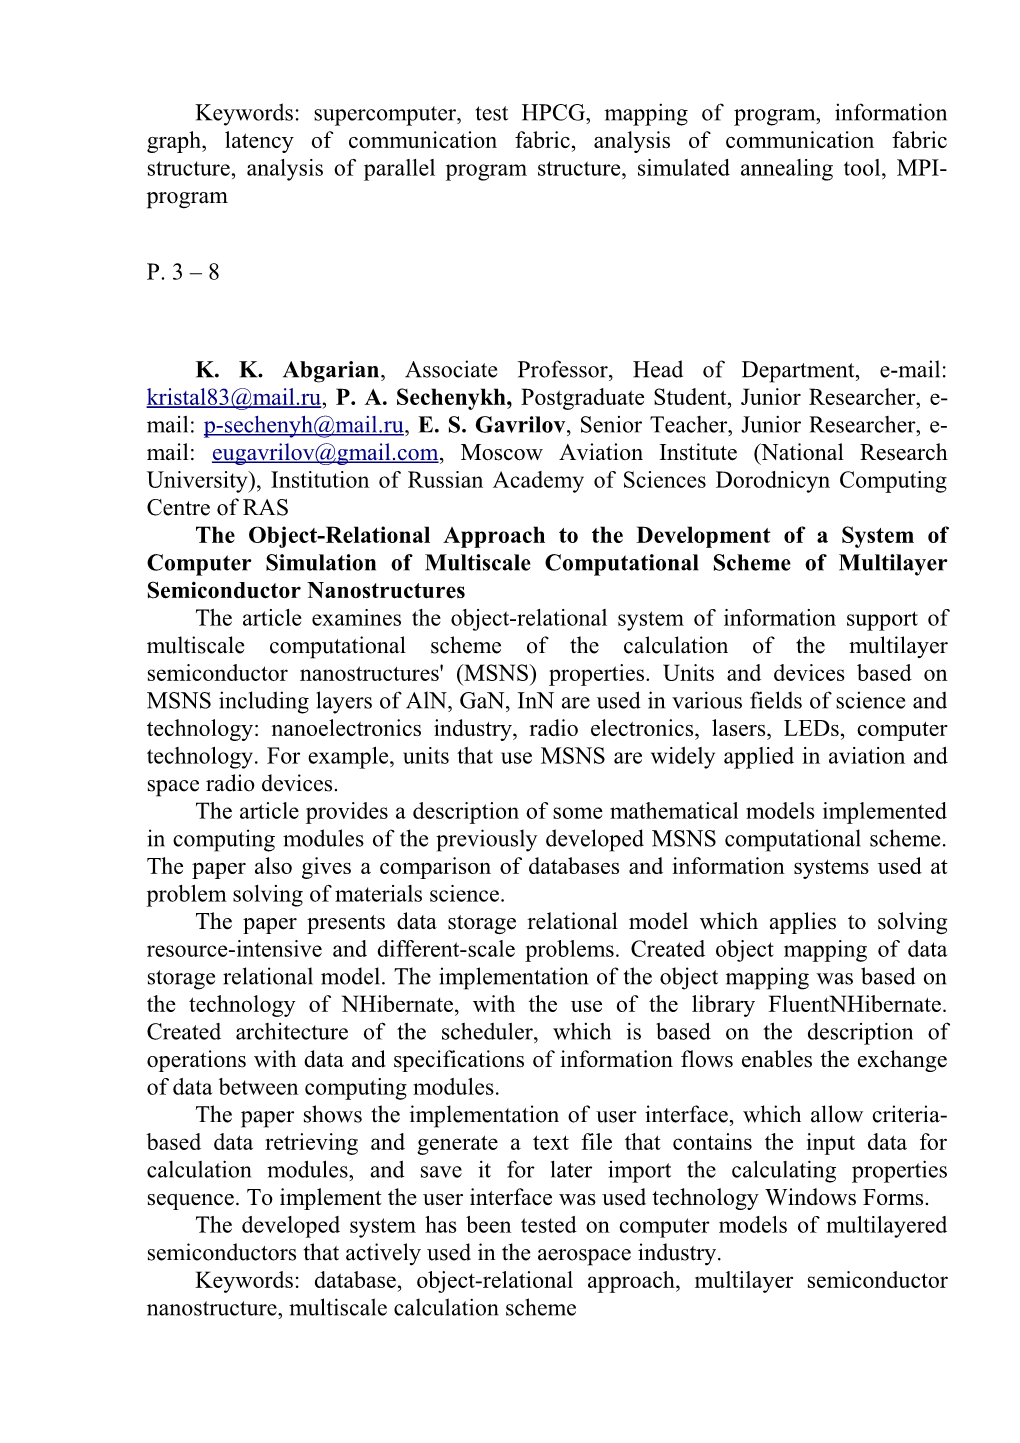 Kiselev E. A., Korneev V. V. Optimization of Mapping Programs to Computing Resources P. 3 - 8